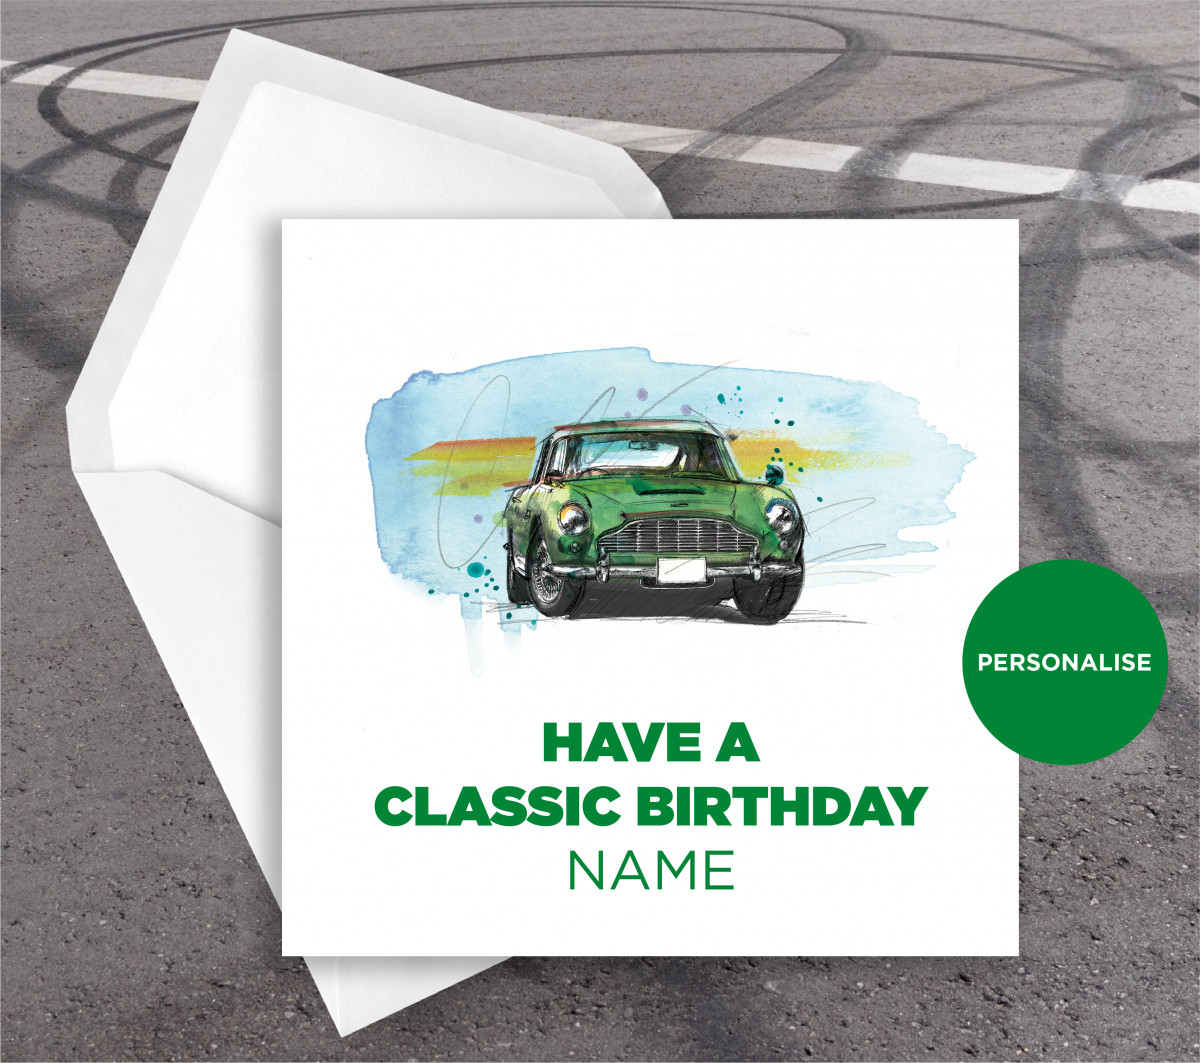 Aston Martin DB5, personalised birthday card